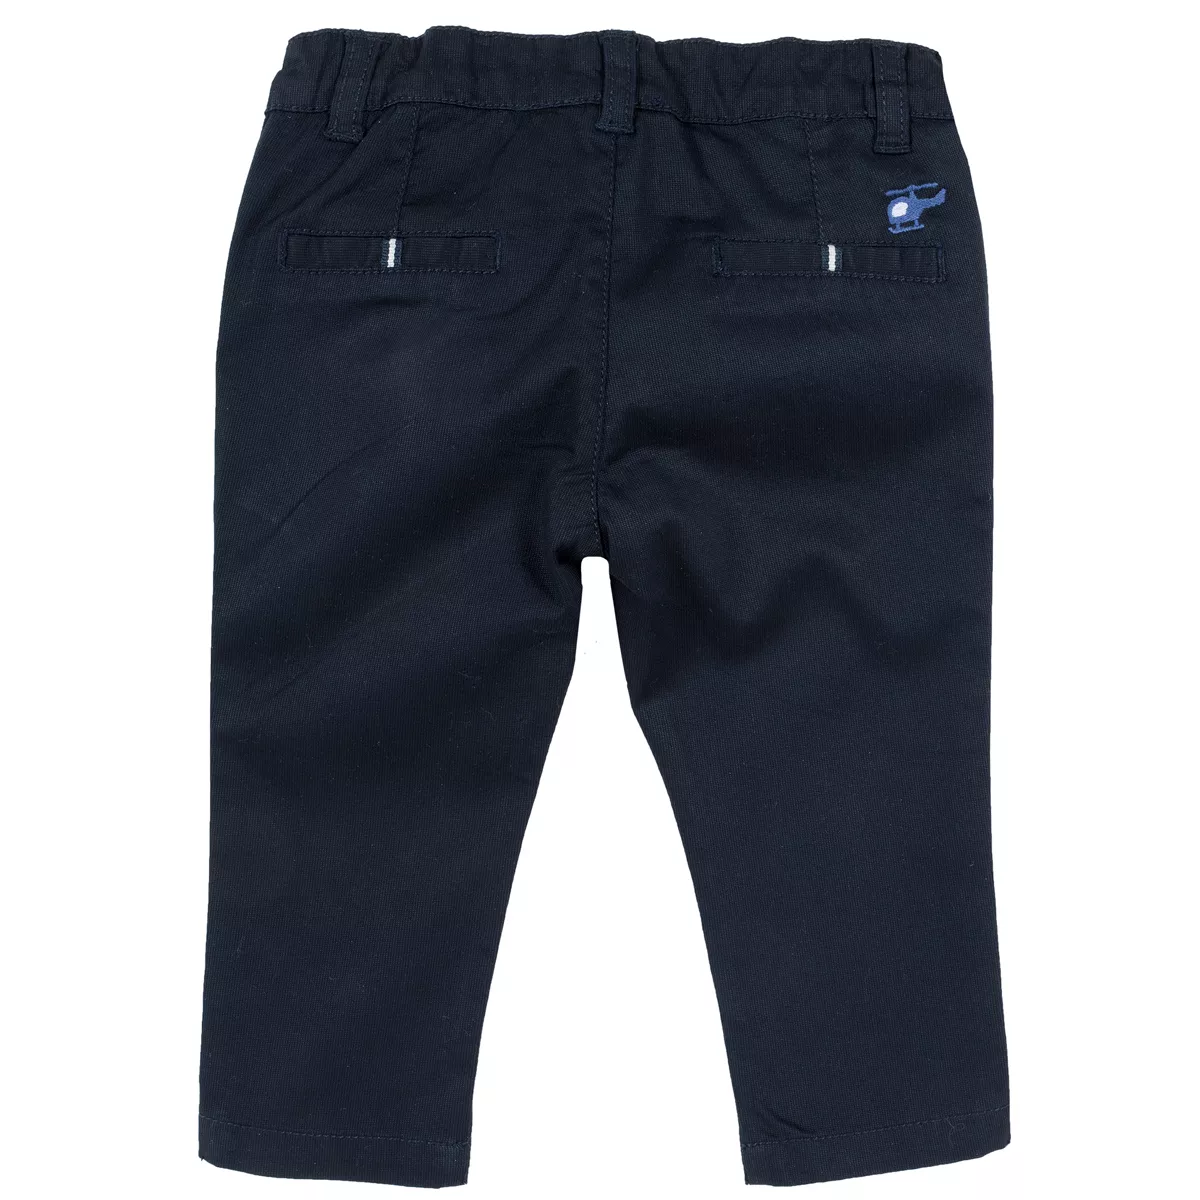 Pantaloni lungi copii Chicco, albastru inchis, 98